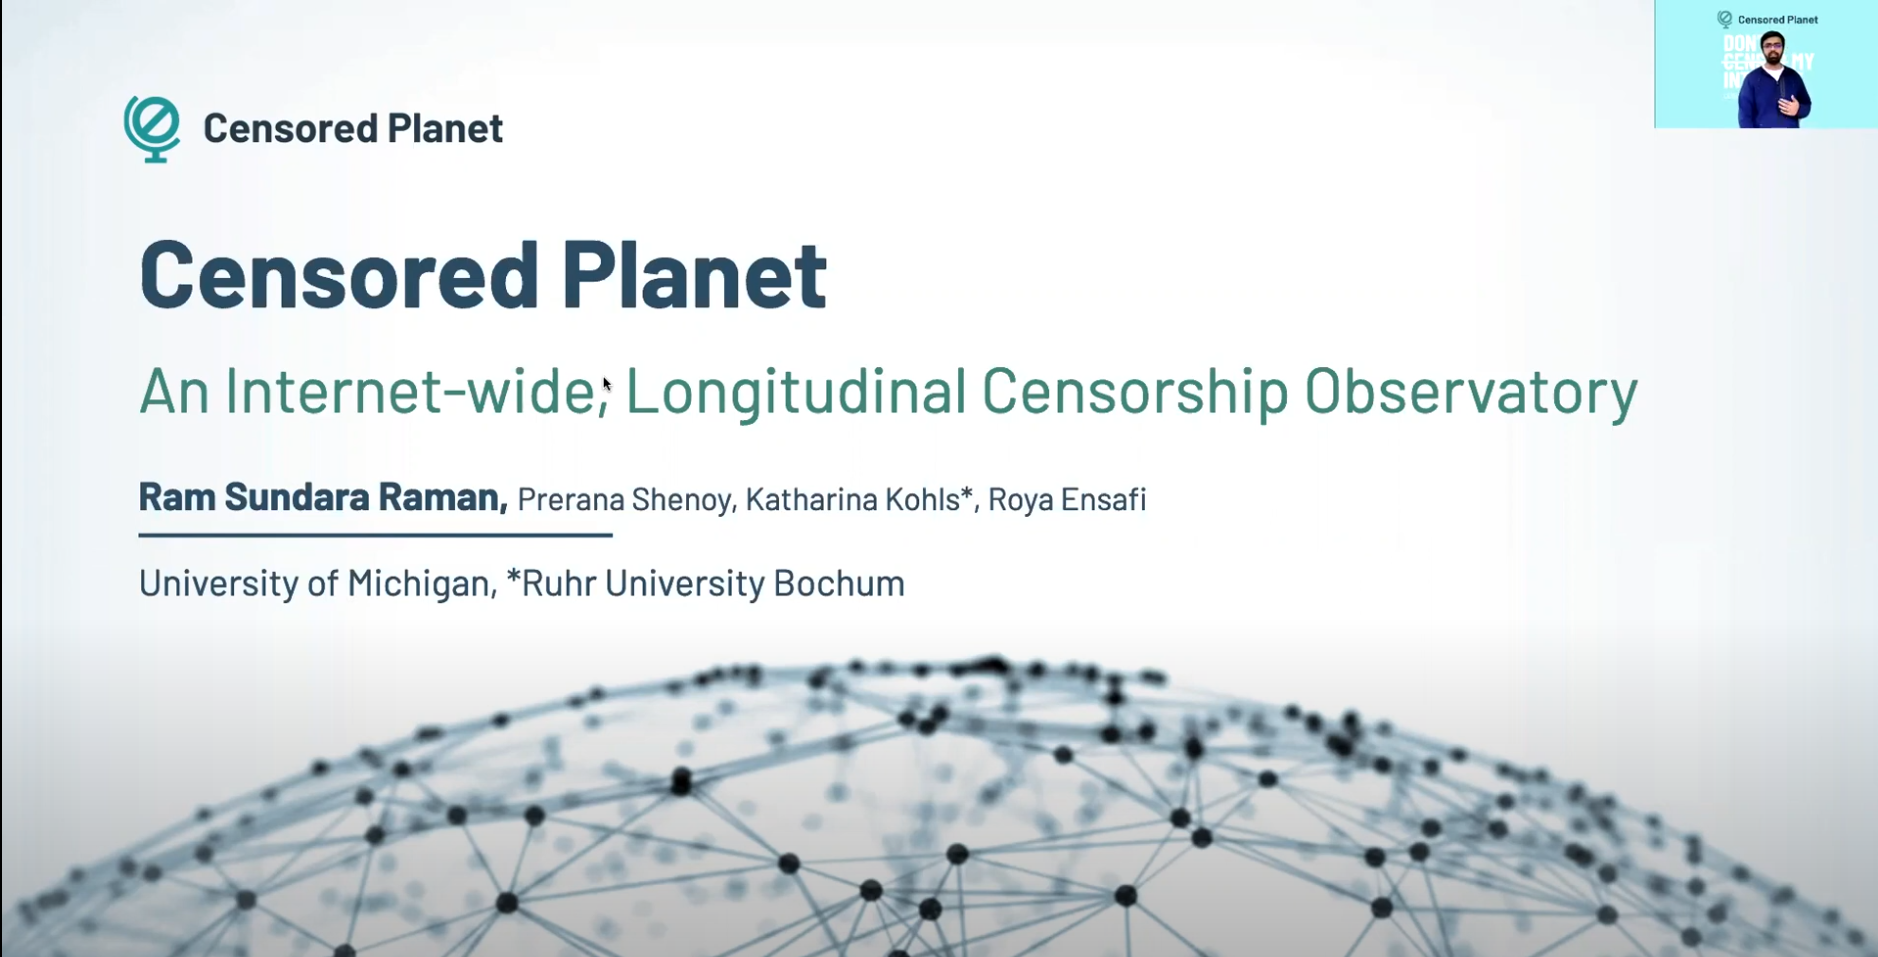 Censored Planet: An Internet-wide, Longitudinal Censorship Observatory